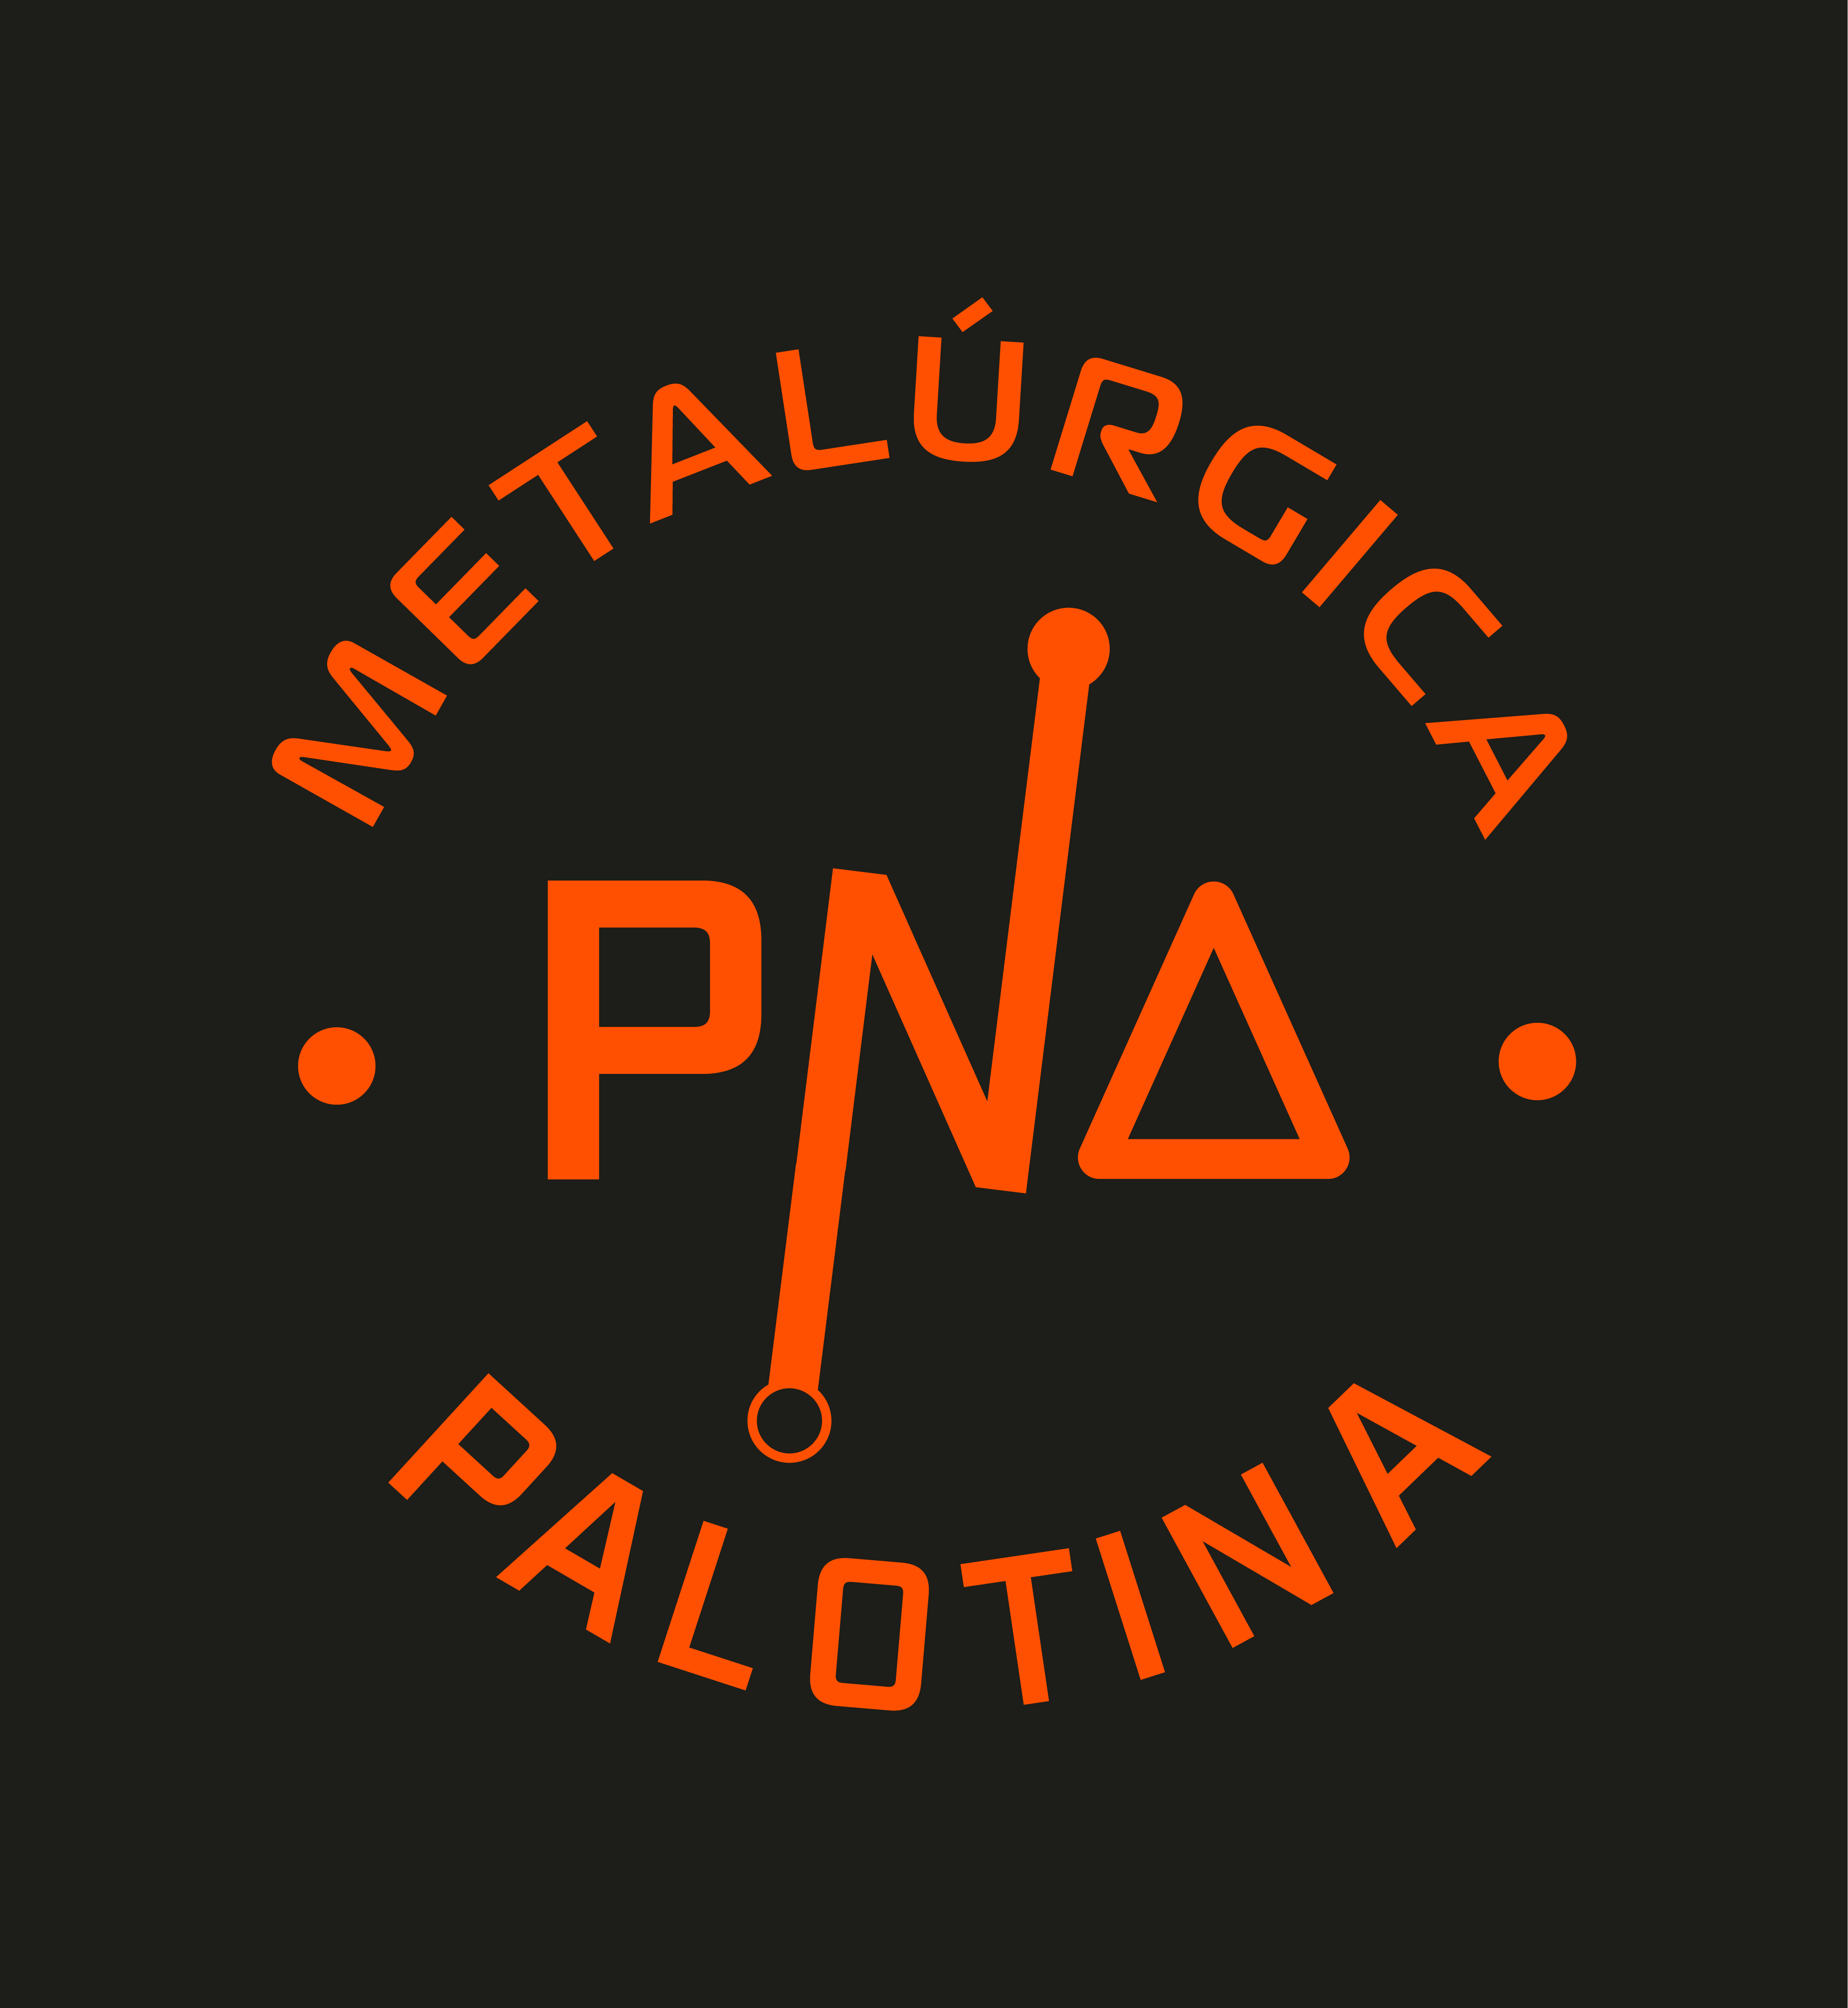 METALURGICA PALOTINA